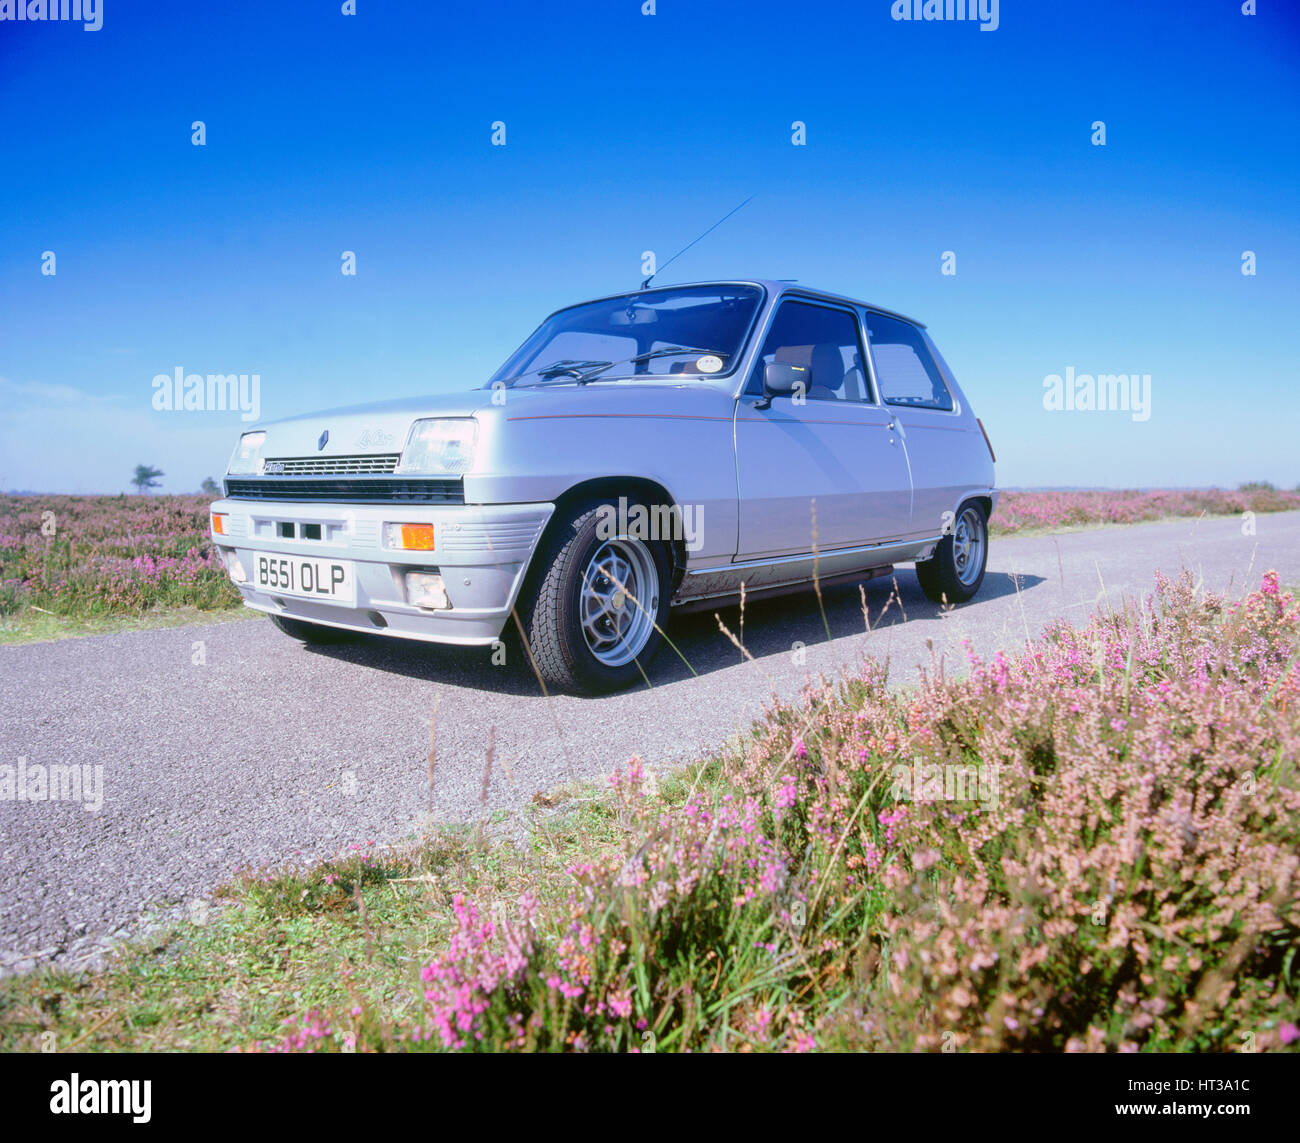 1985 Renault 5 Turbo Voiture Le. Artiste : Inconnu. Banque D'Images